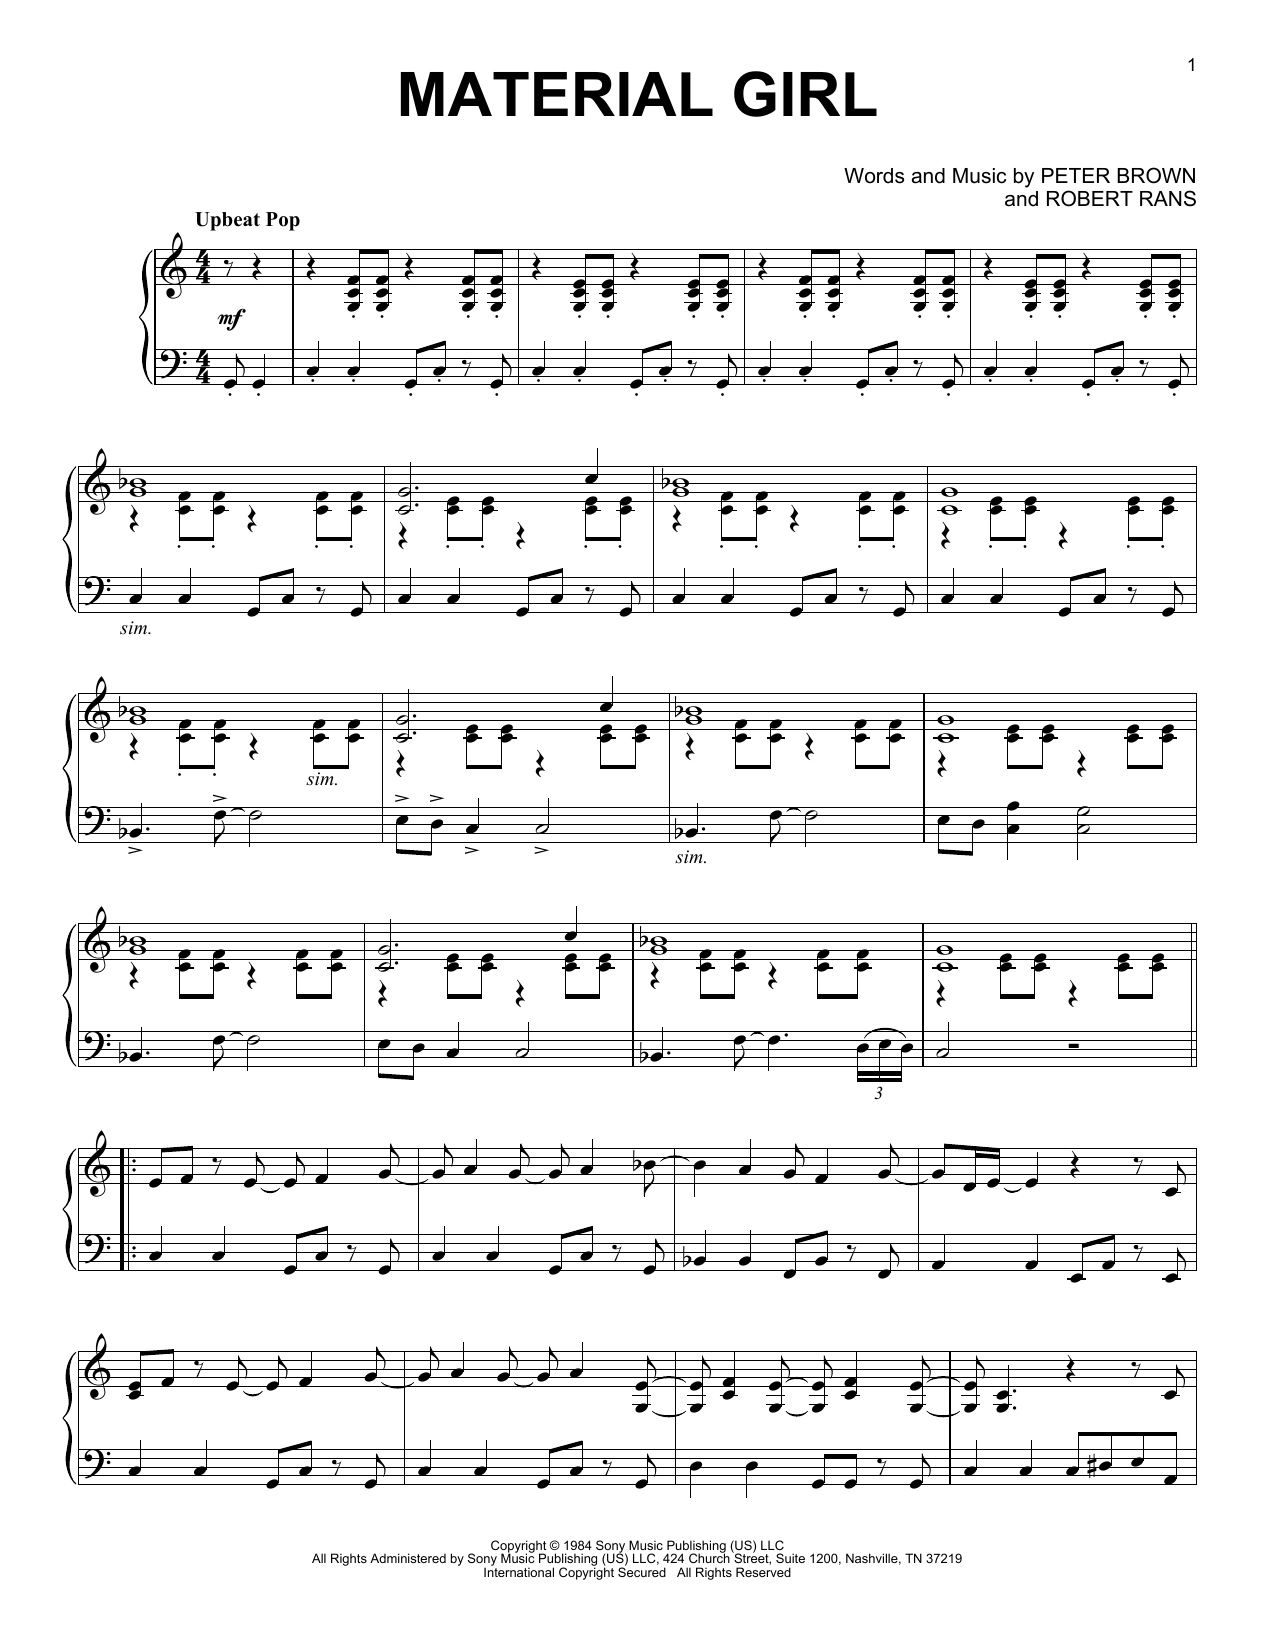 Kris Bowers "Material Girl (from the Netflix series Bridgerton)" Sheet Music Download Printable PDF Score. SKU 1207681